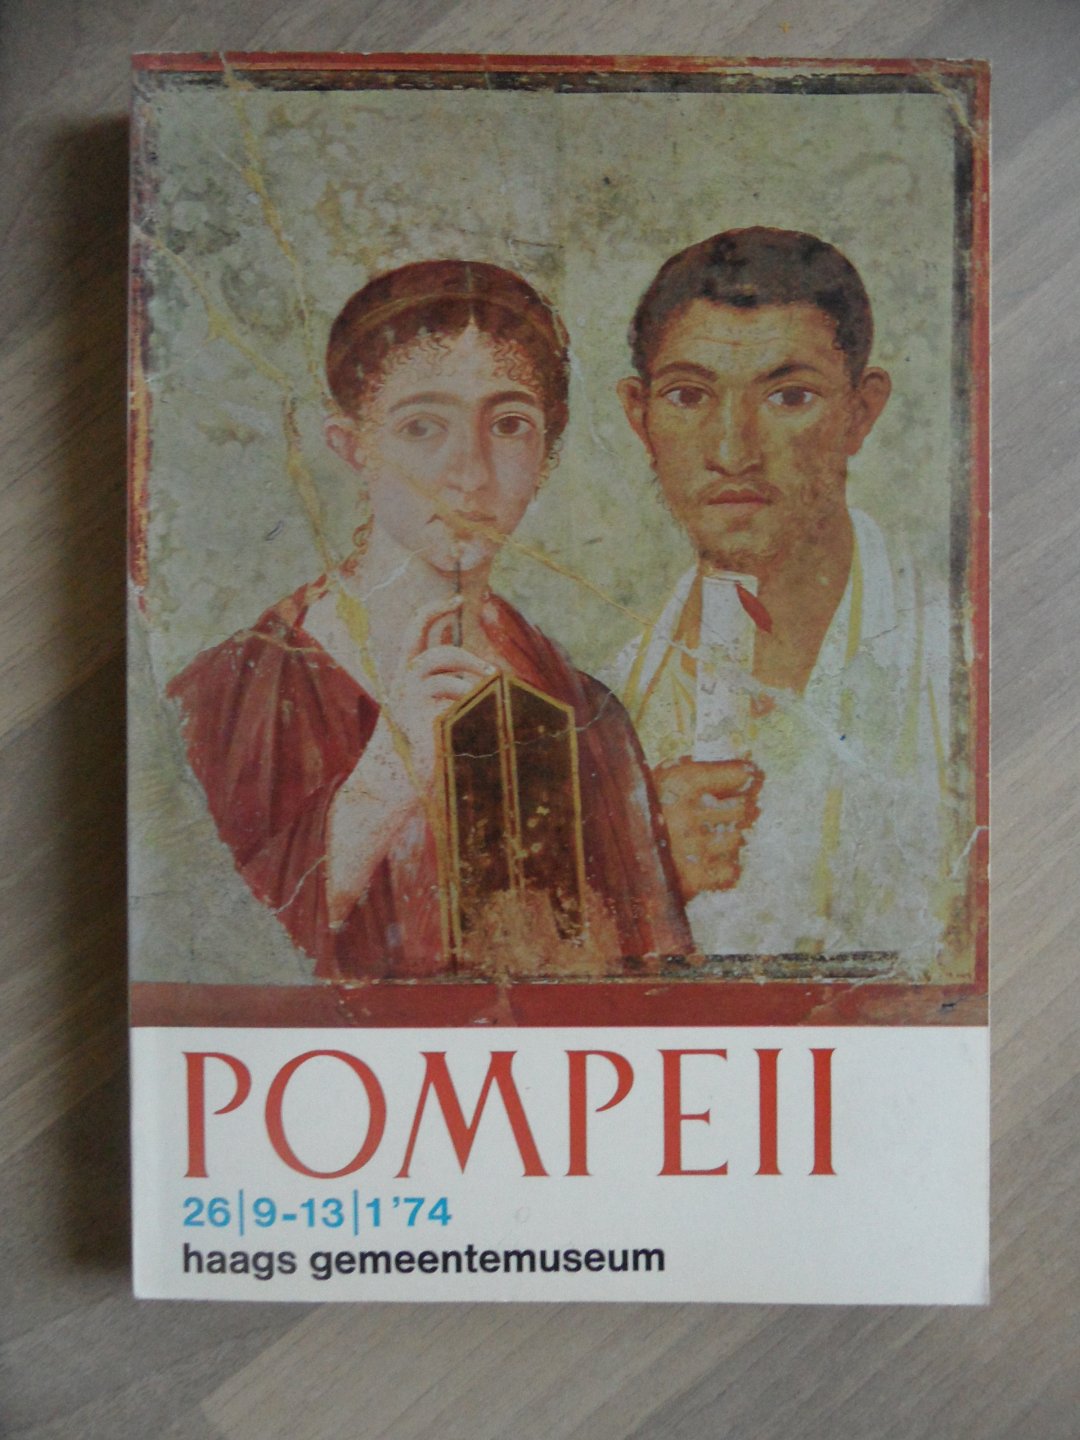 Haags gemeentemuseum - Pompeii - Pompeï, 26-9 - 13-1 '74